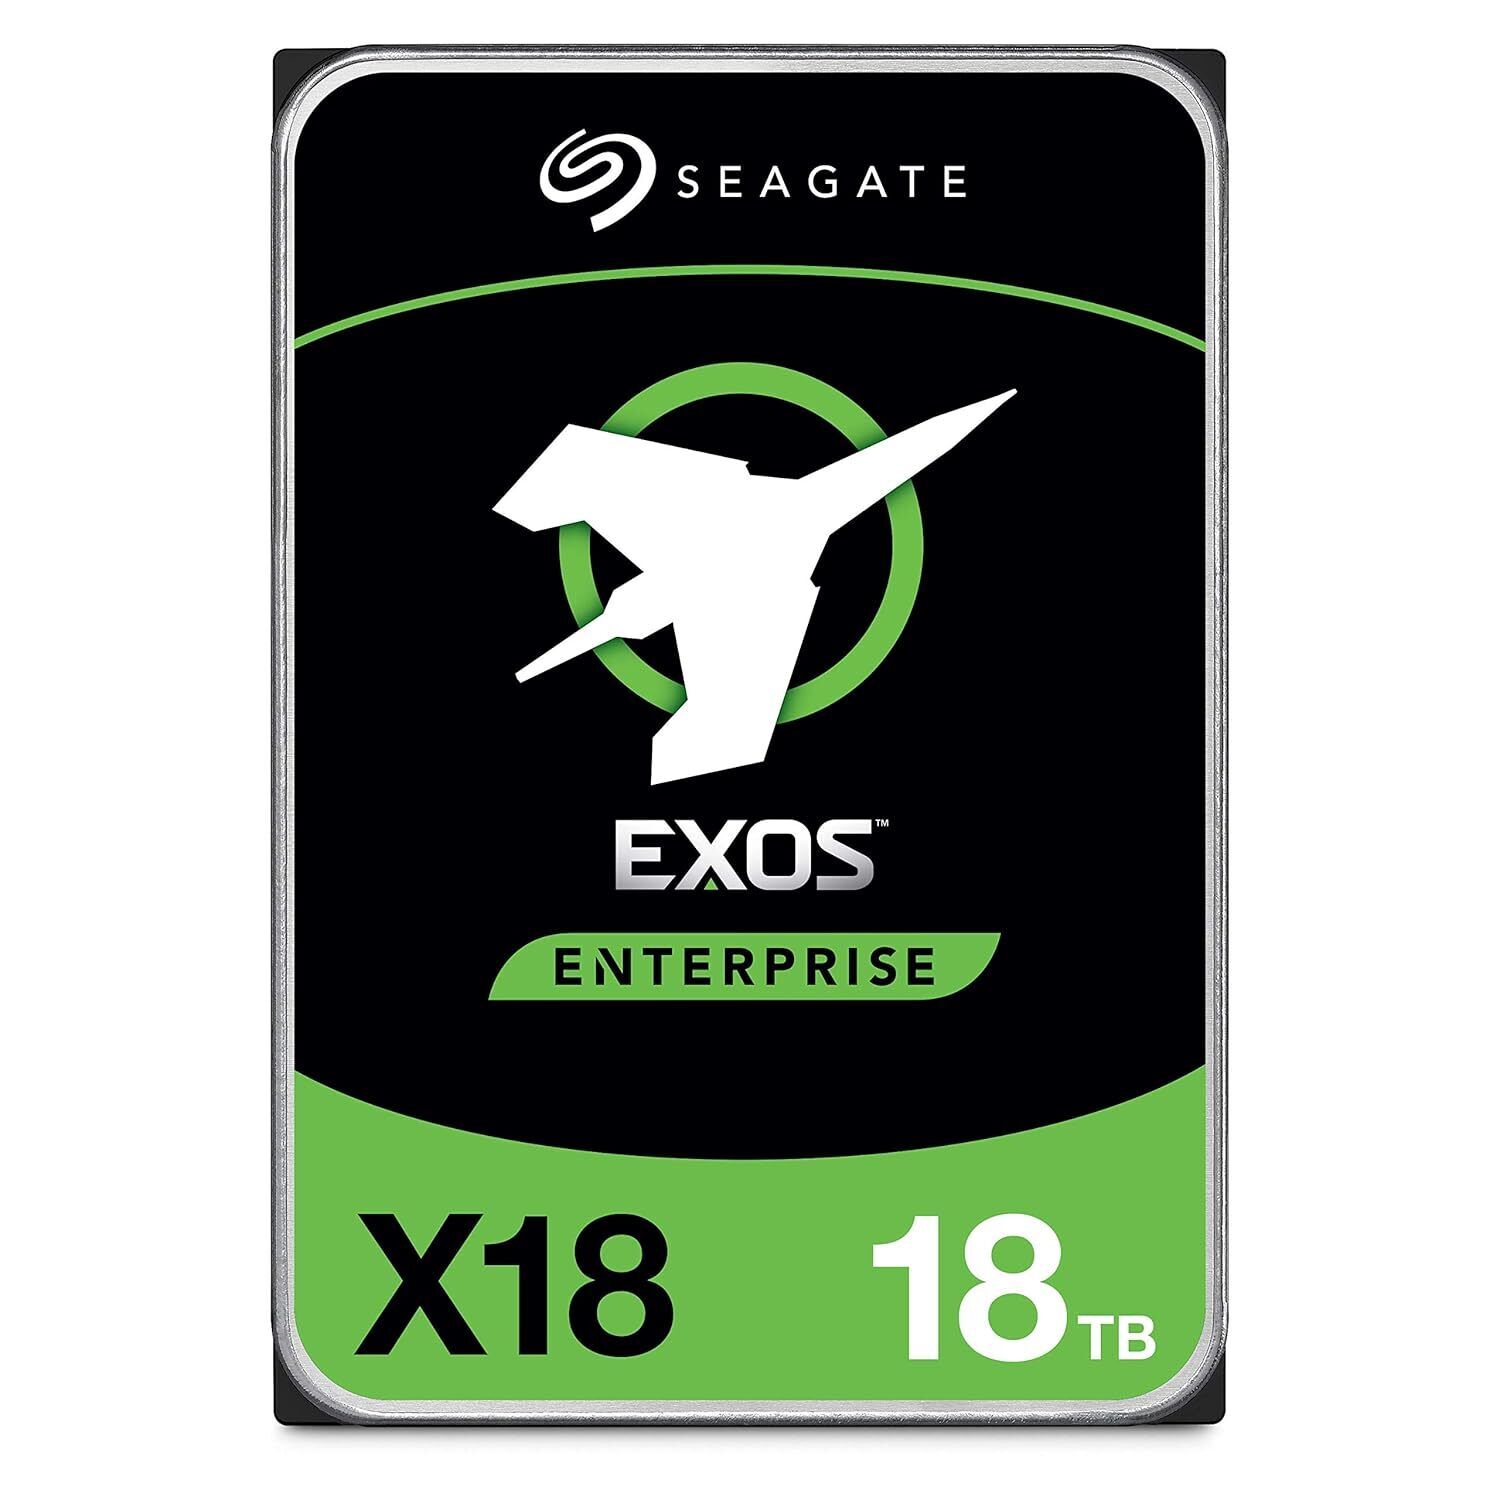 Seagate Exos X18 18TB Enterprise HDD - CMR 3.5 Inch Hyperscale SATA 6Gb/s, 720